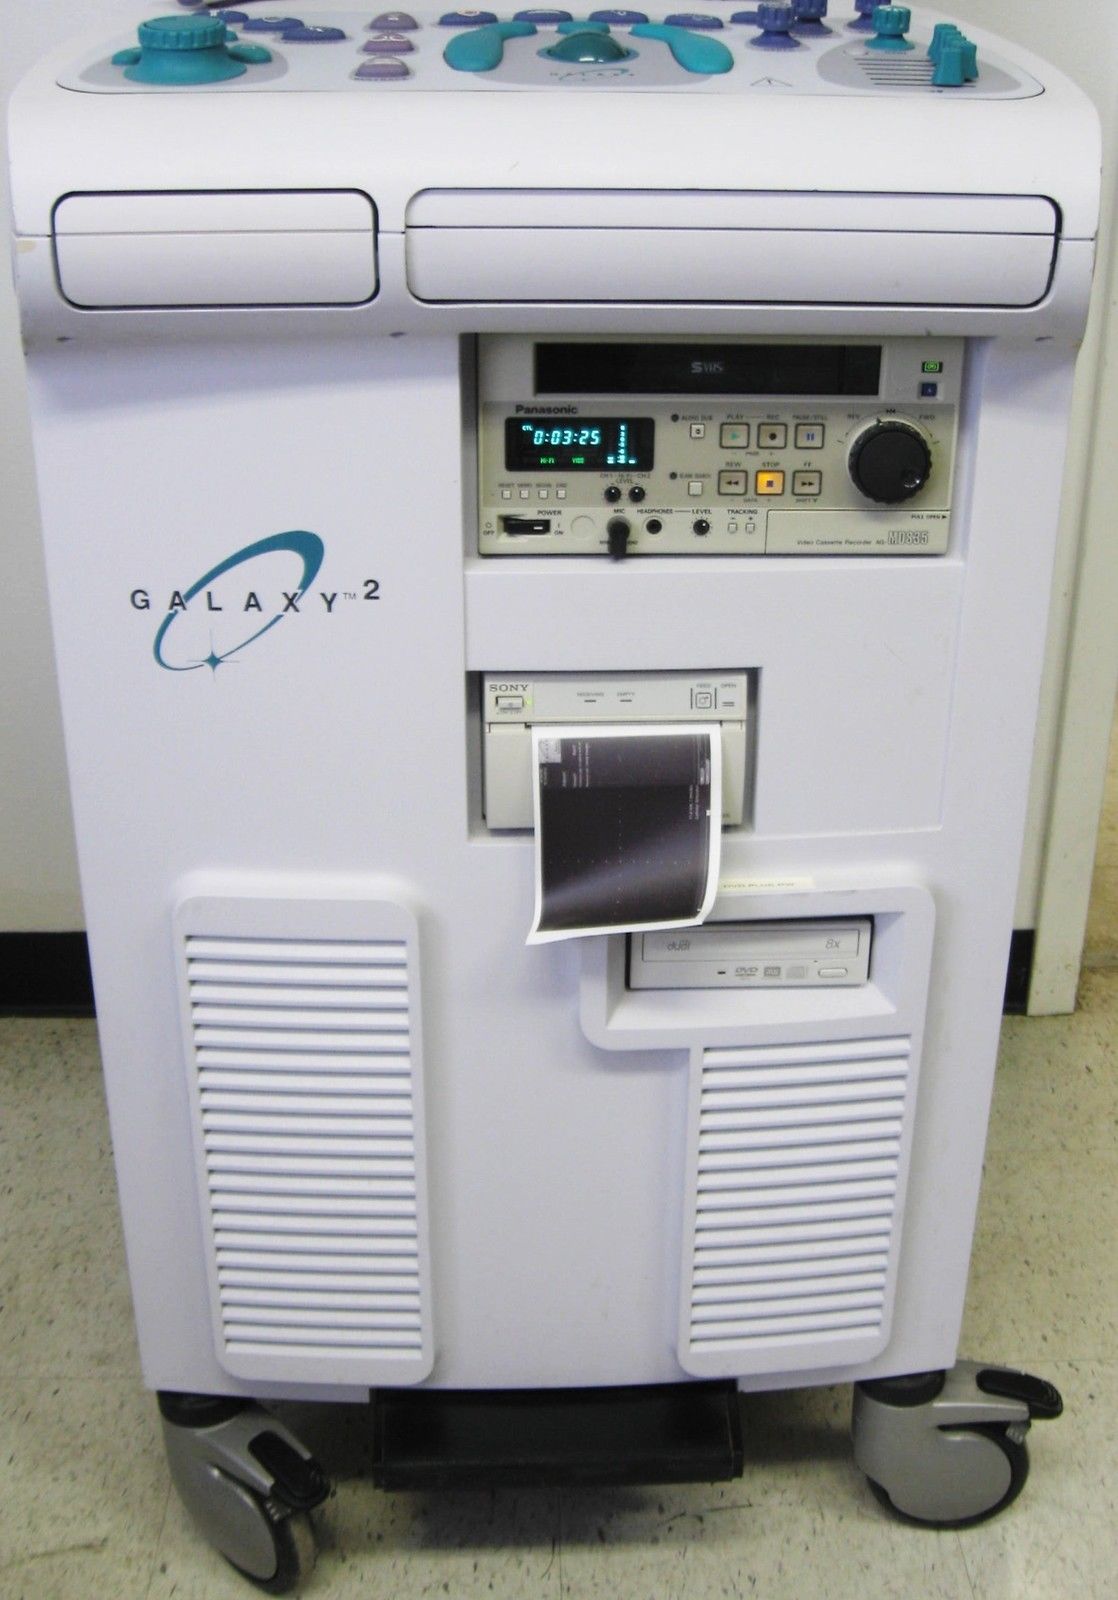 Boston Scientific Galaxy 2 Intravascular Ultrasound System, Ref. # I5128 DIAGNOSTIC ULTRASOUND MACHINES FOR SALE